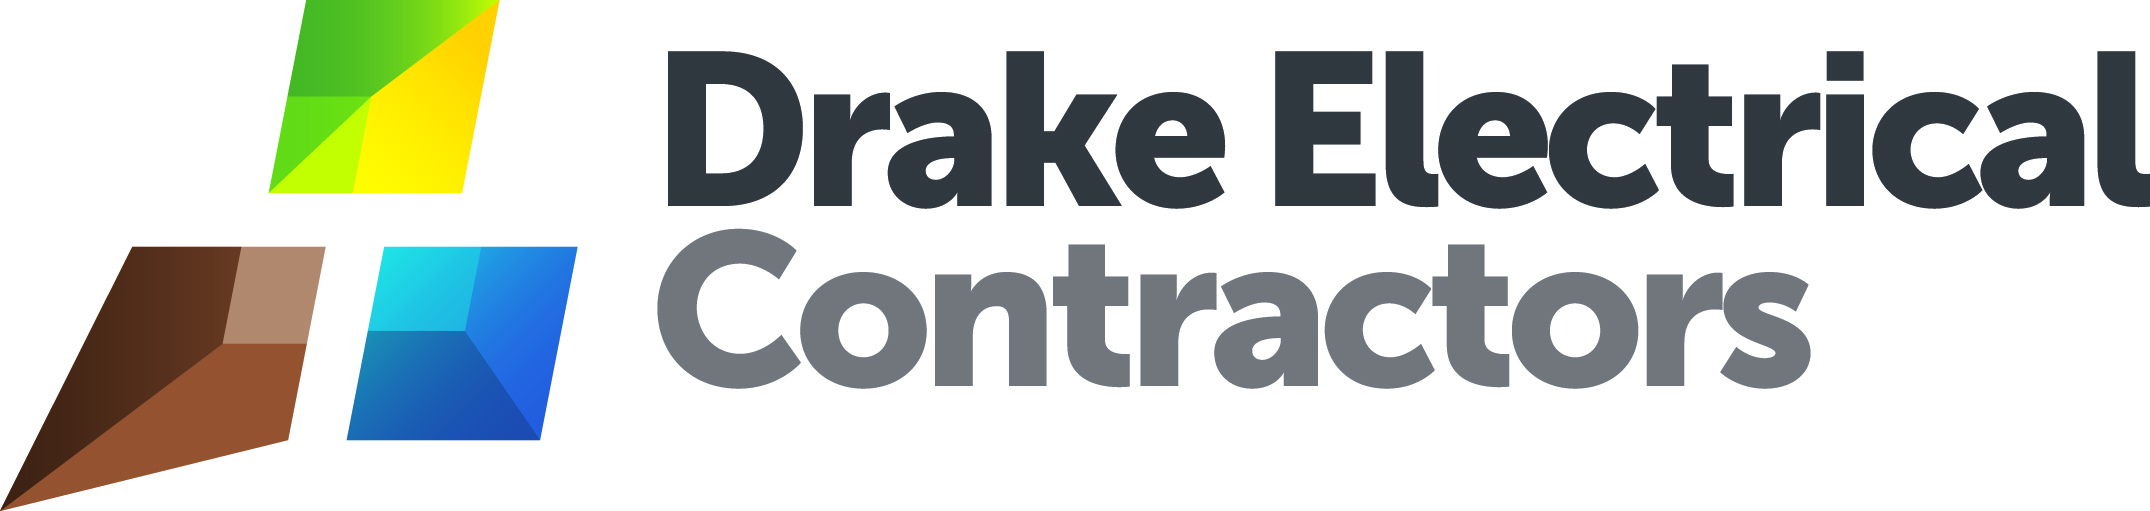 Drake_Electrical_Contractors_logo